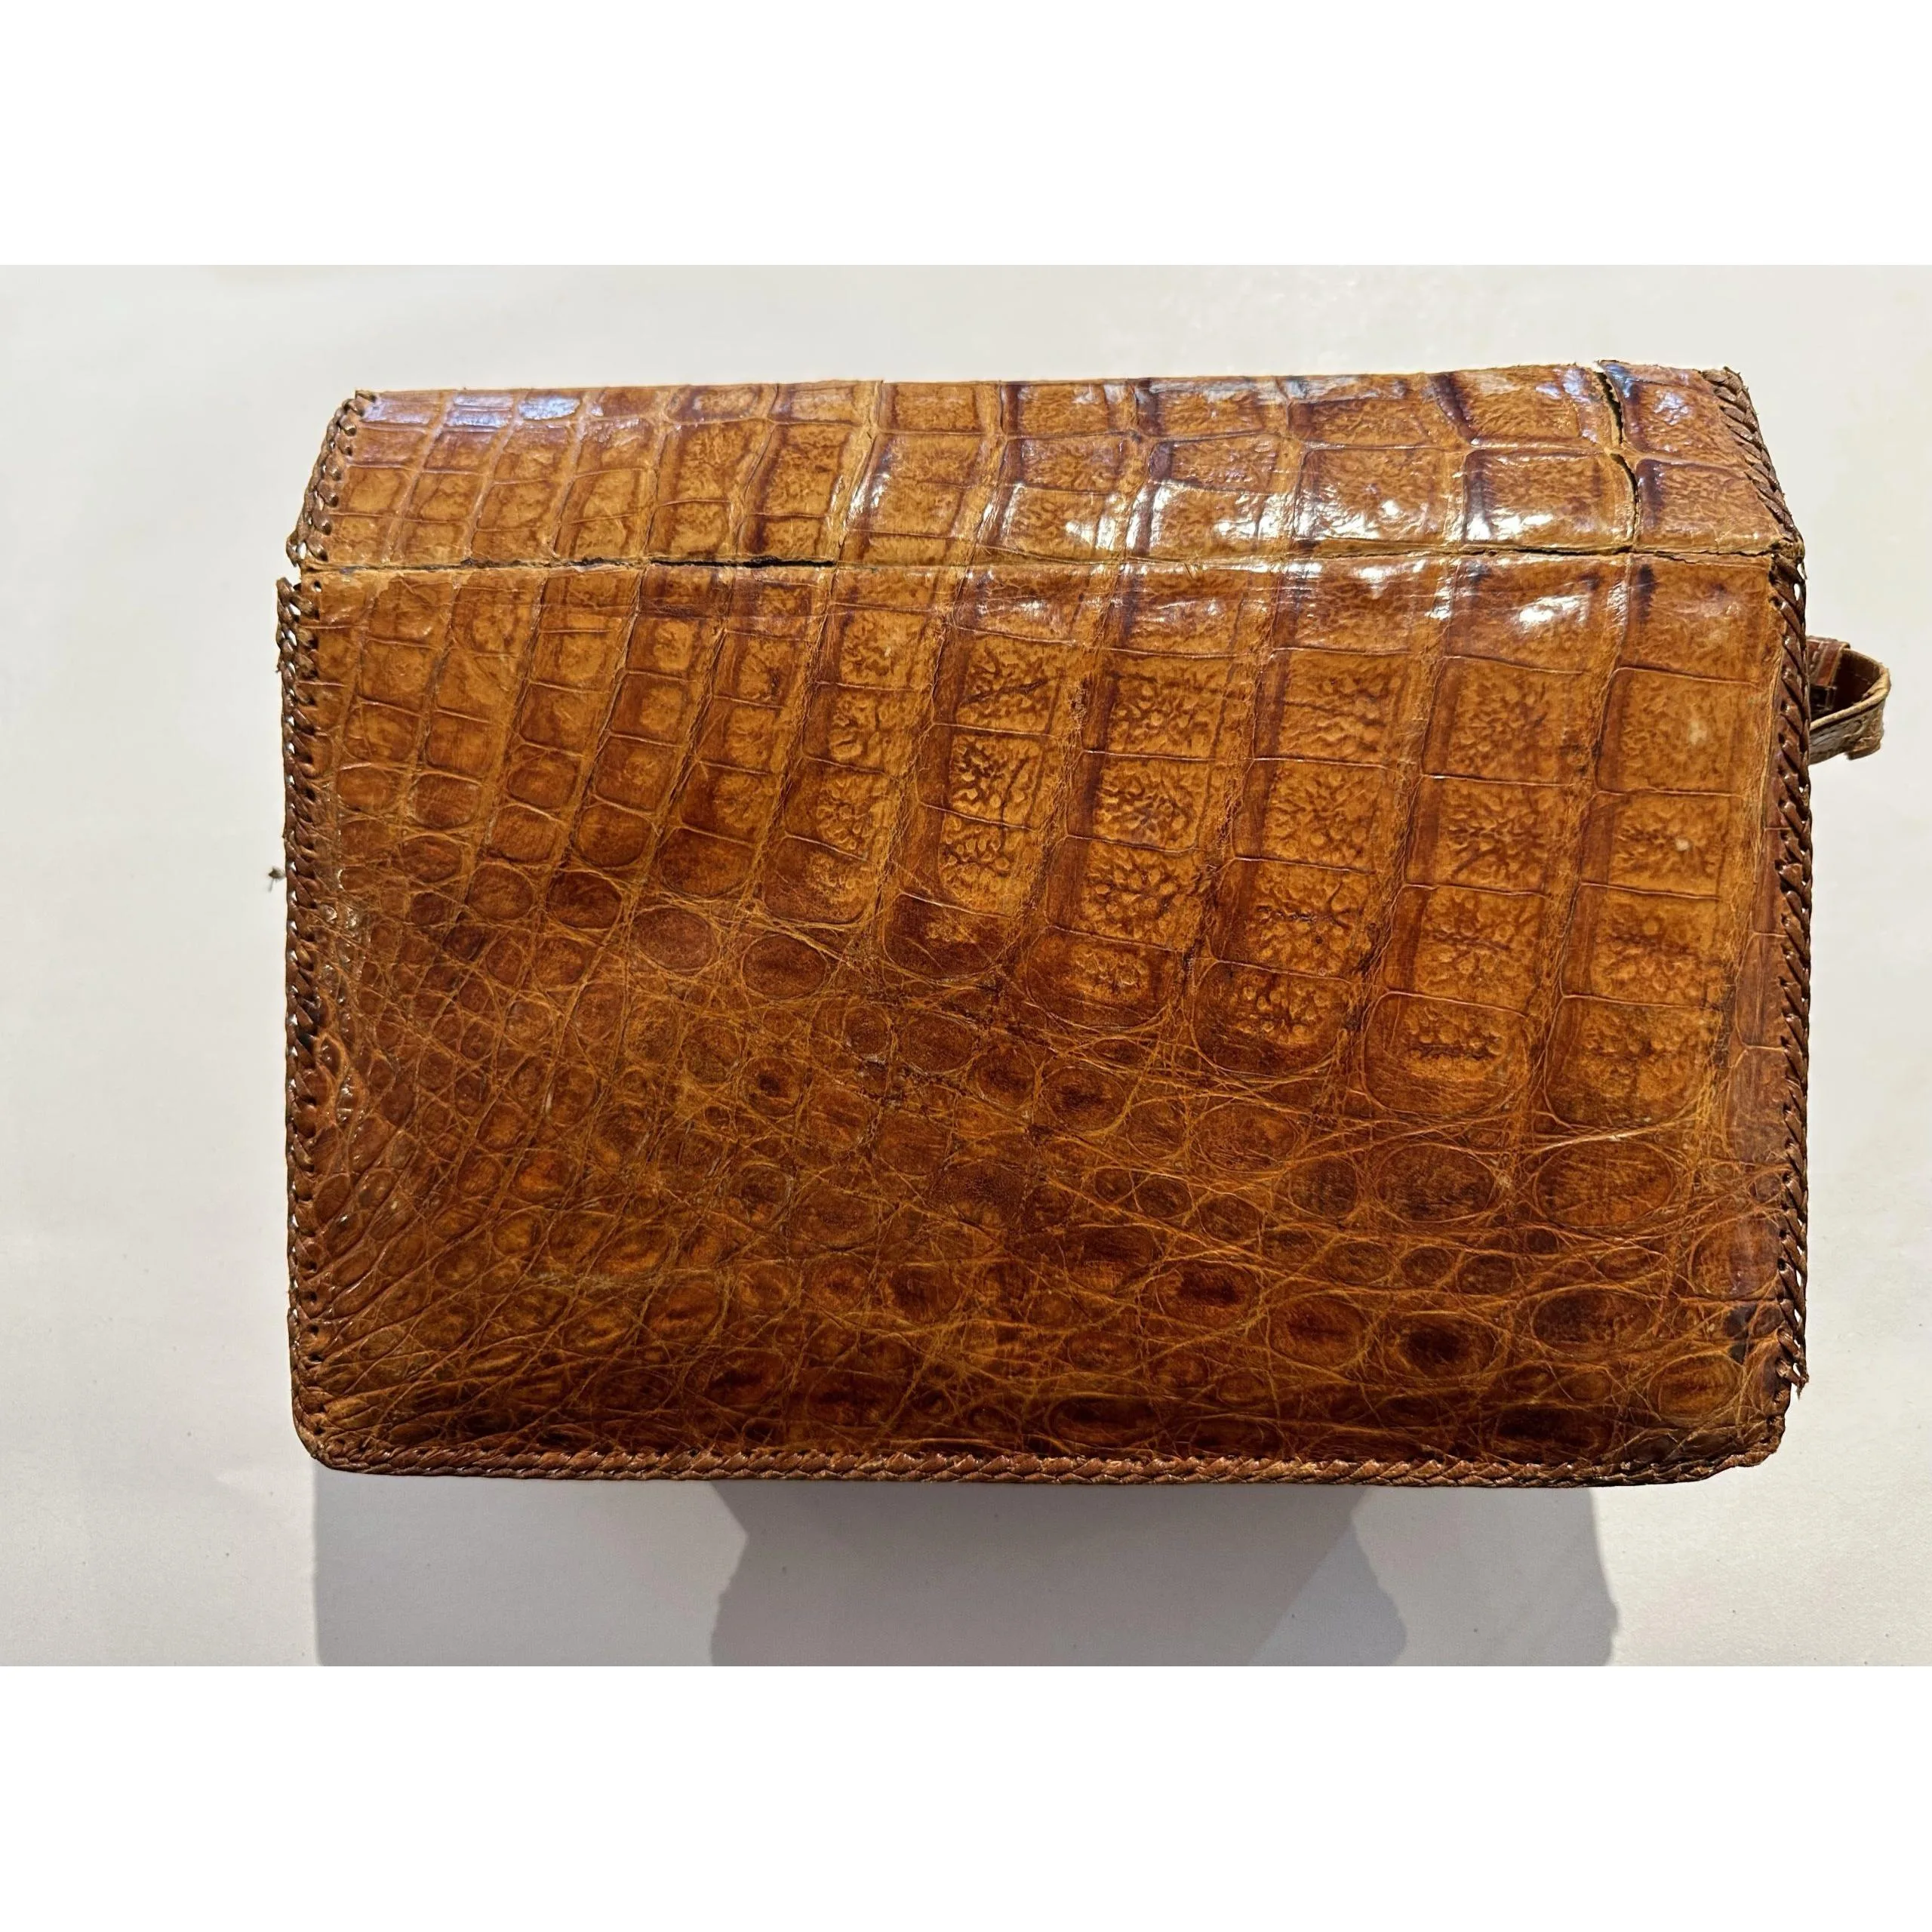 Vintage Full Body Alligator Taxidermy Handbag Purse Made in Florida